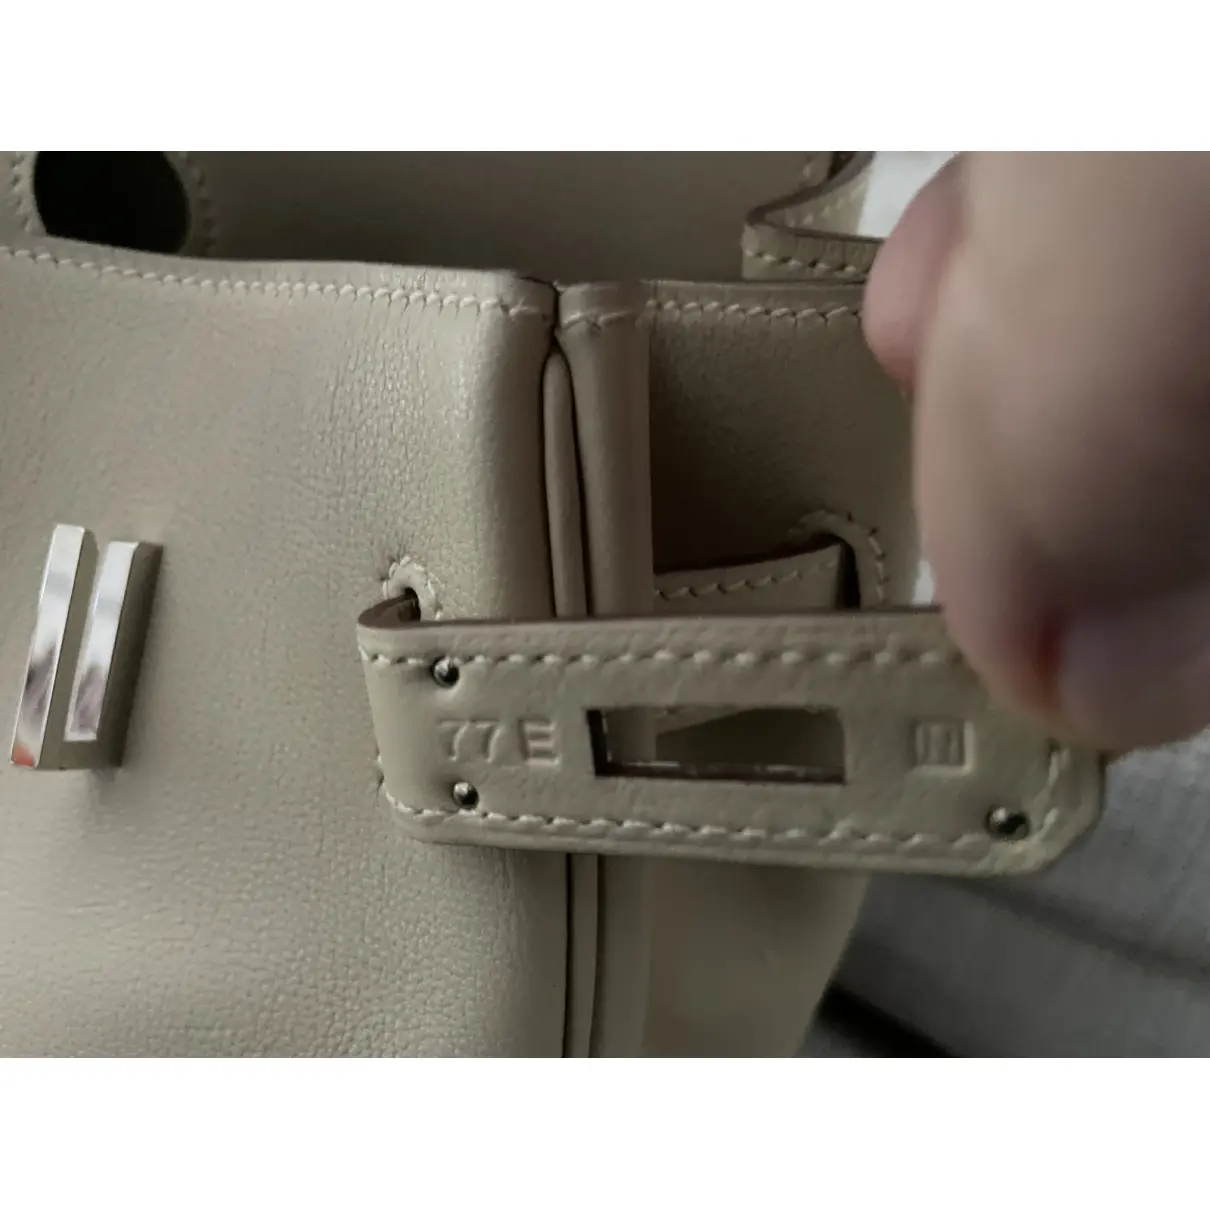 Birkin 30 leather handbag Hermès